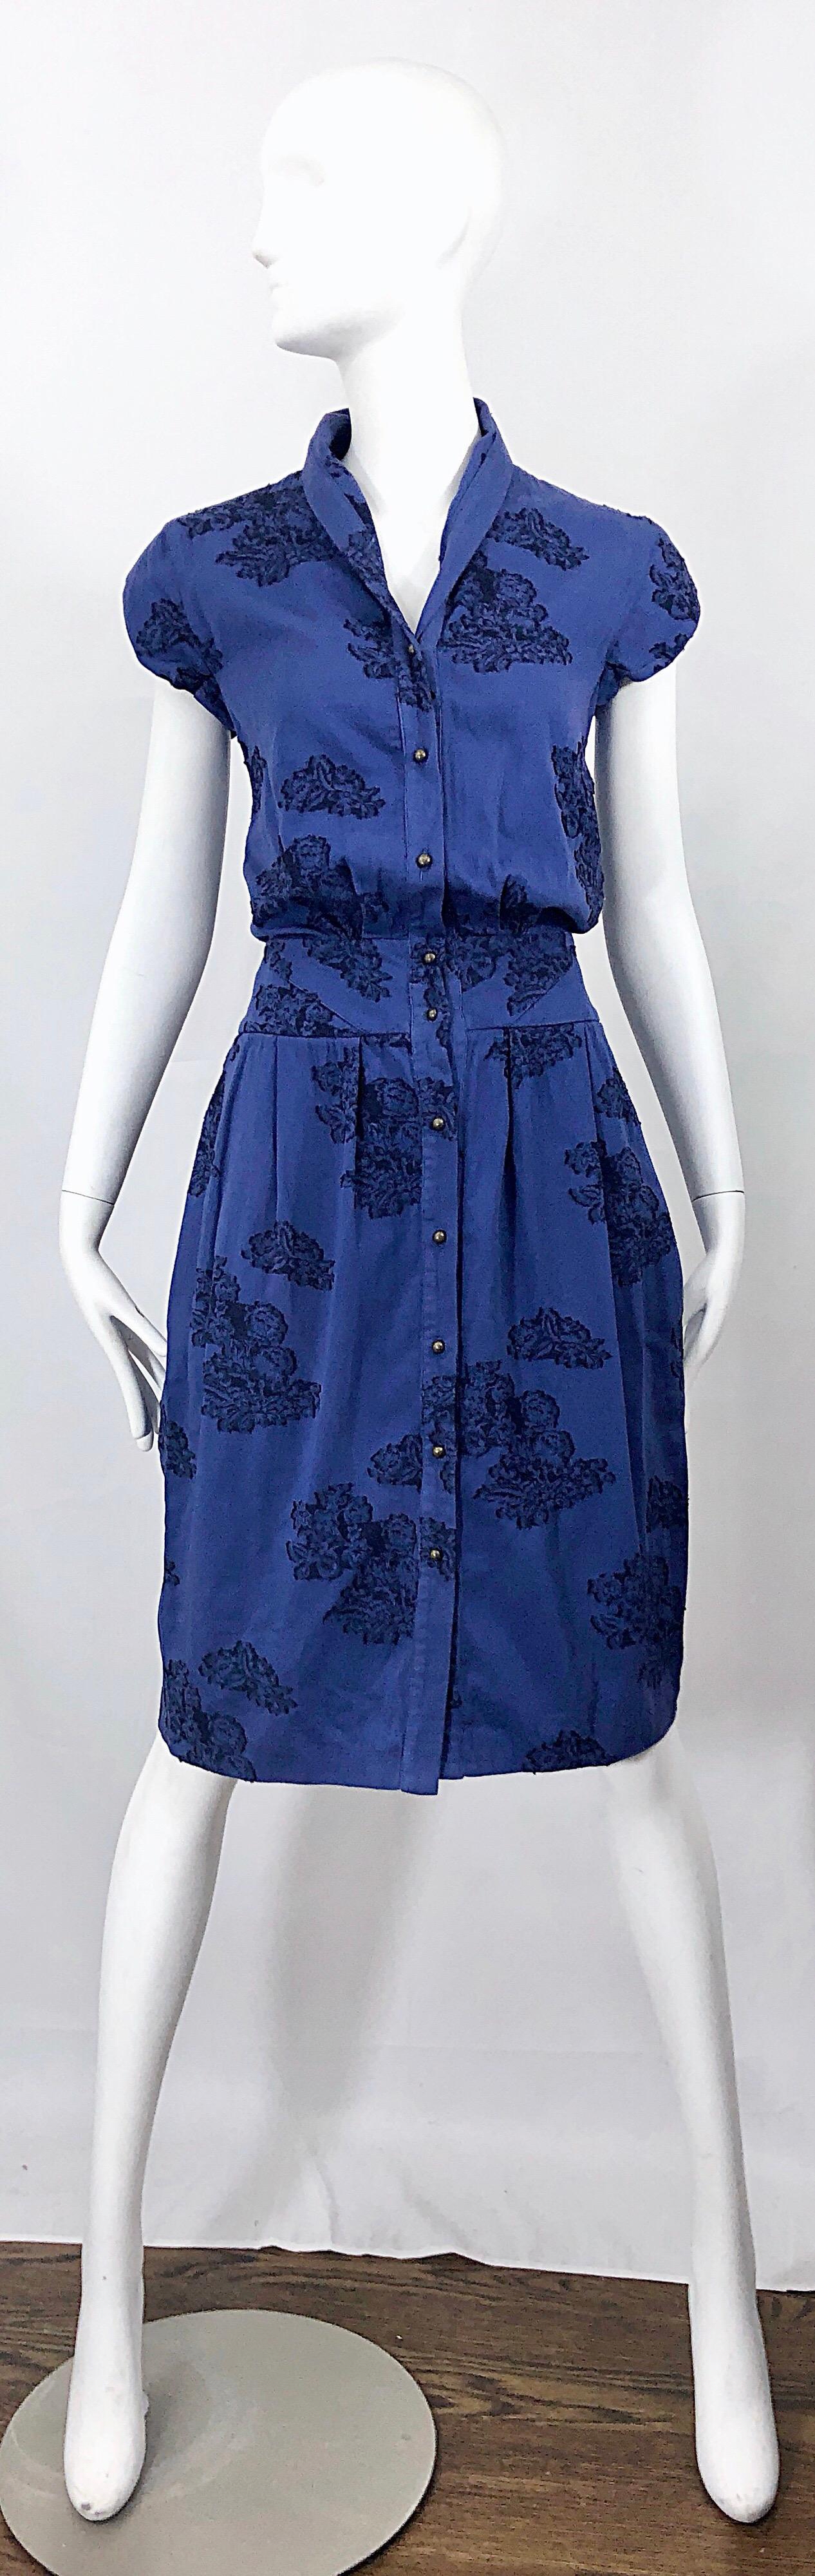 Alexander McQueen Blue + Black Lace Print Size 40 1950s Style Bustle Dress 5